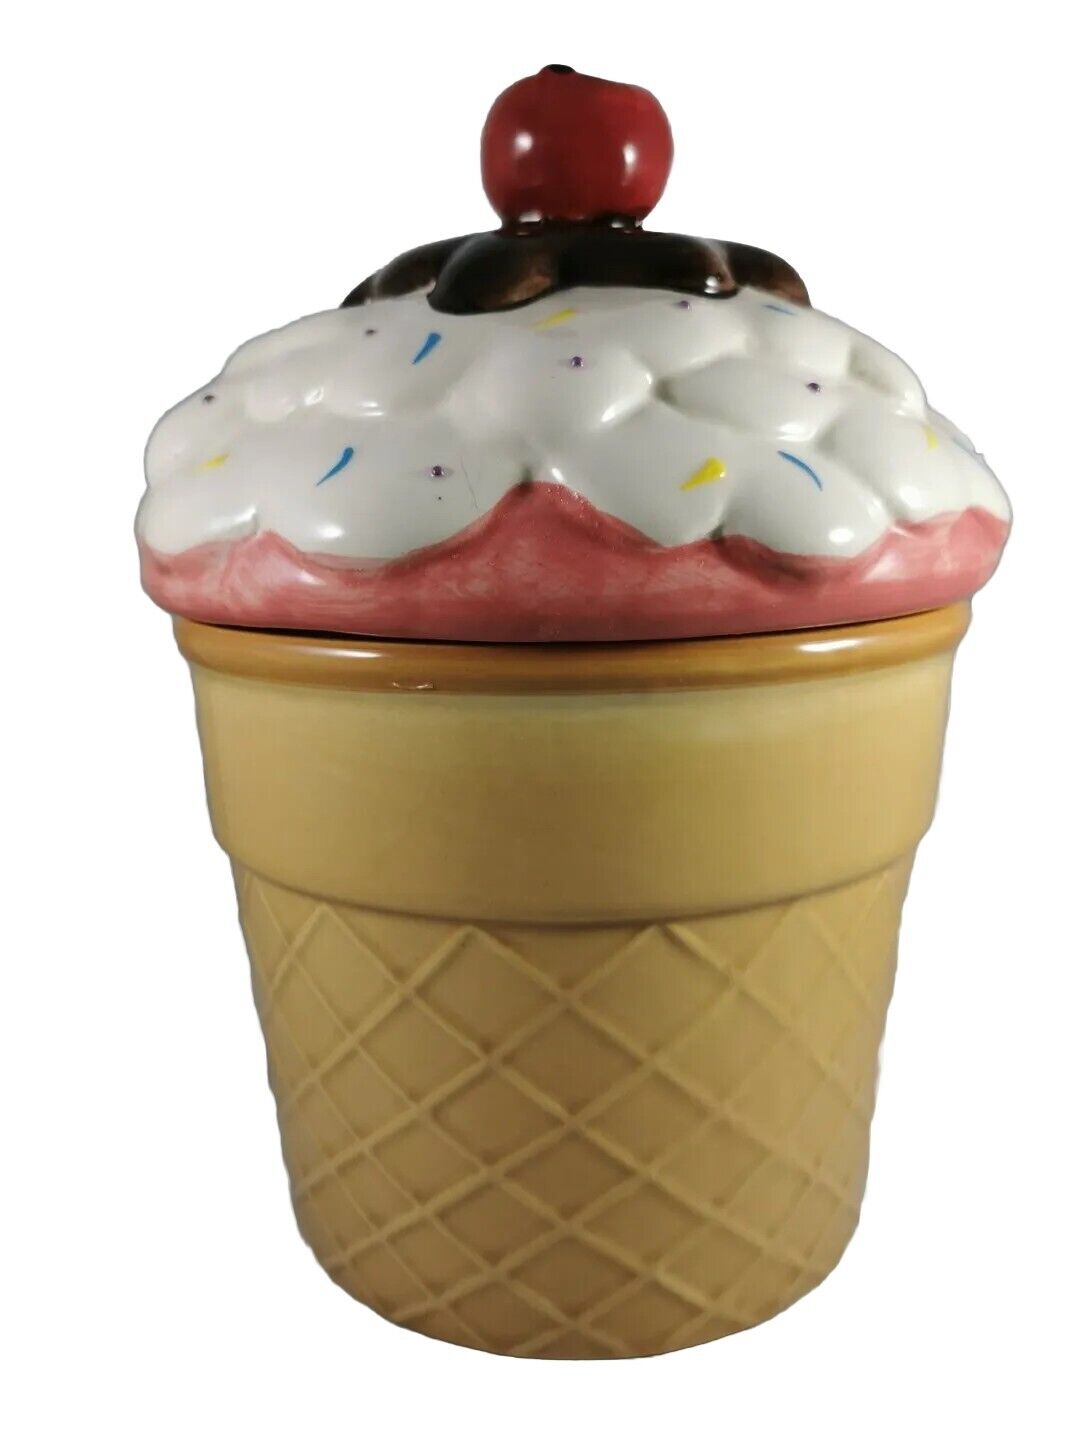 Cherry Top Ice Cream Cone Ceramic Cookie Jar Cherry On Top Rare Cupcake 